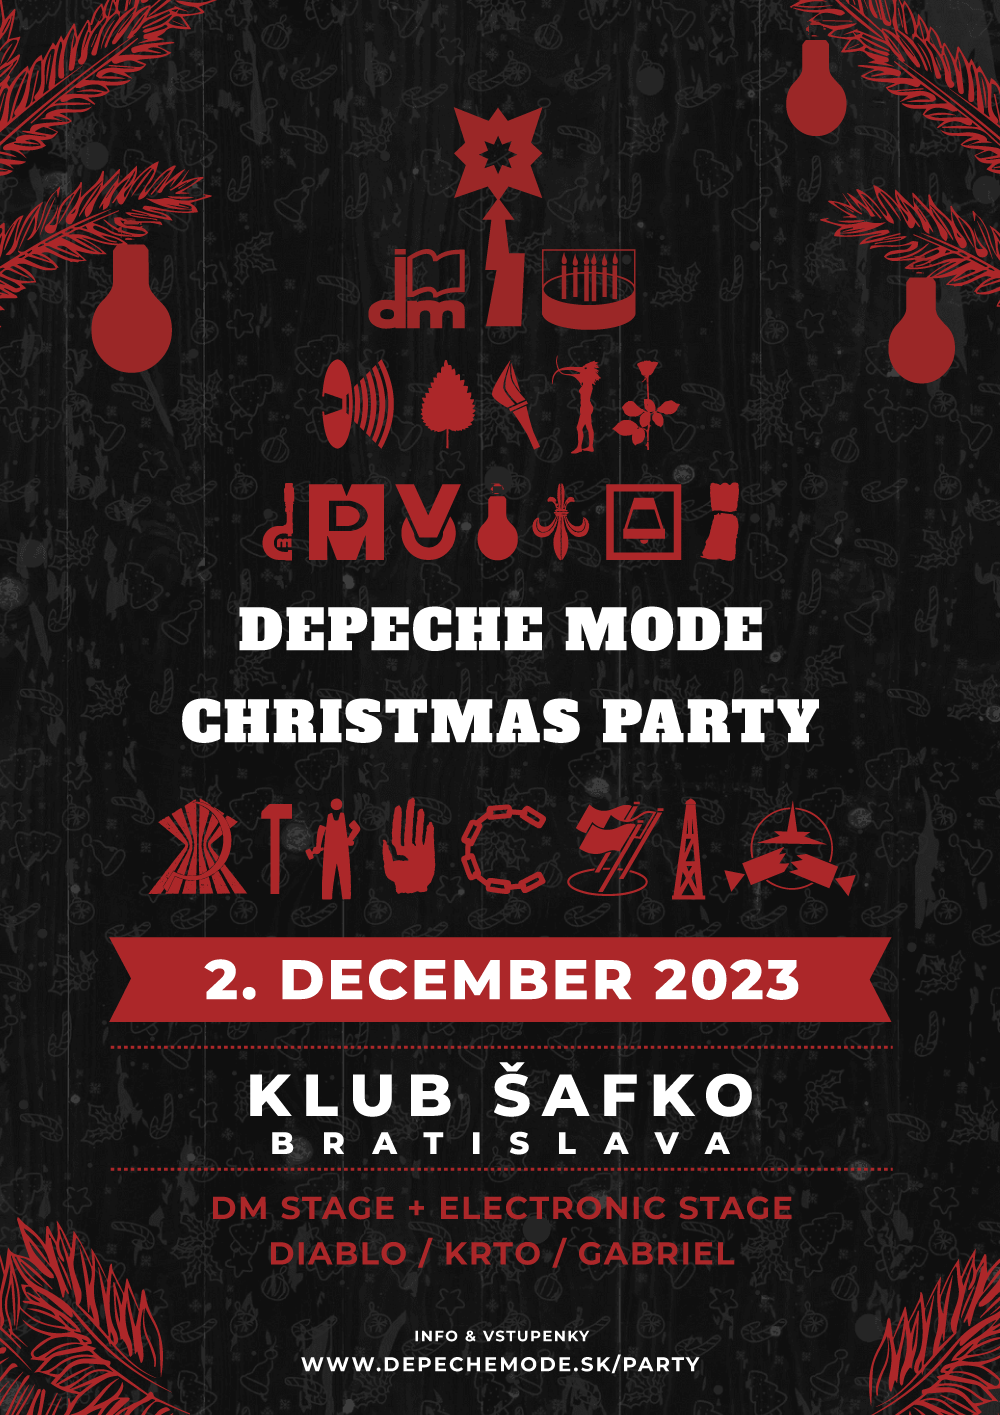 Plagát akcie: Depeche Mode Christmas Party